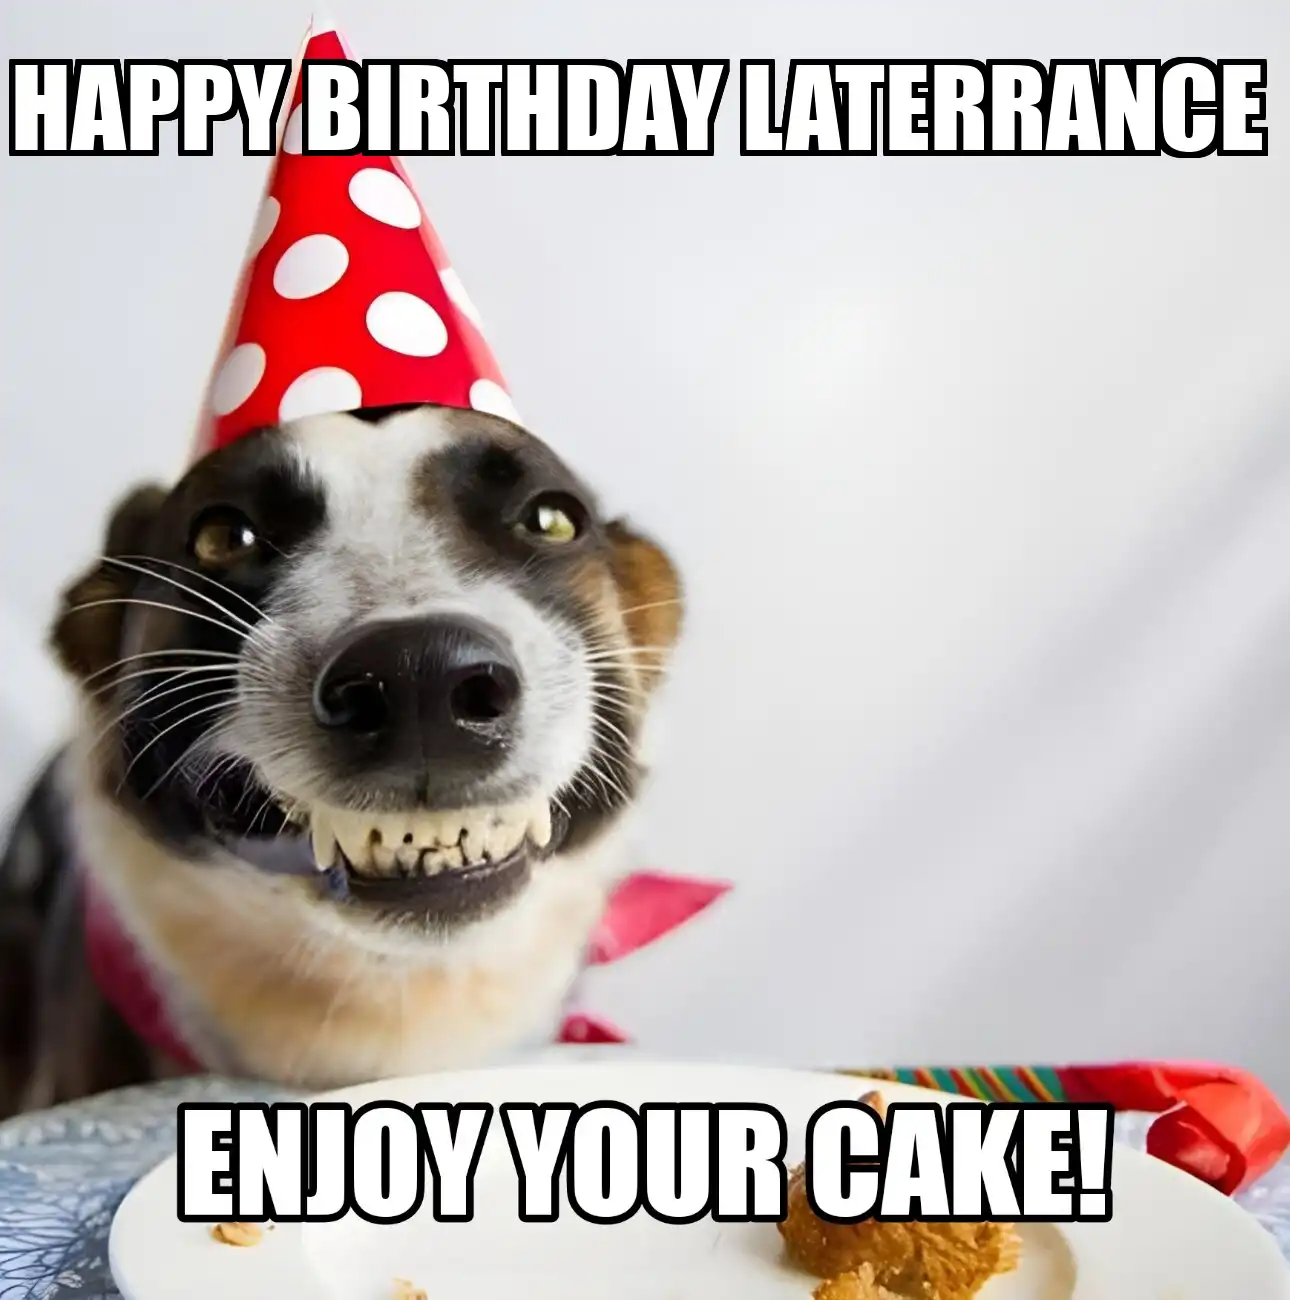 Happy Birthday Laterrance Enjoy Your Cake Dog Meme